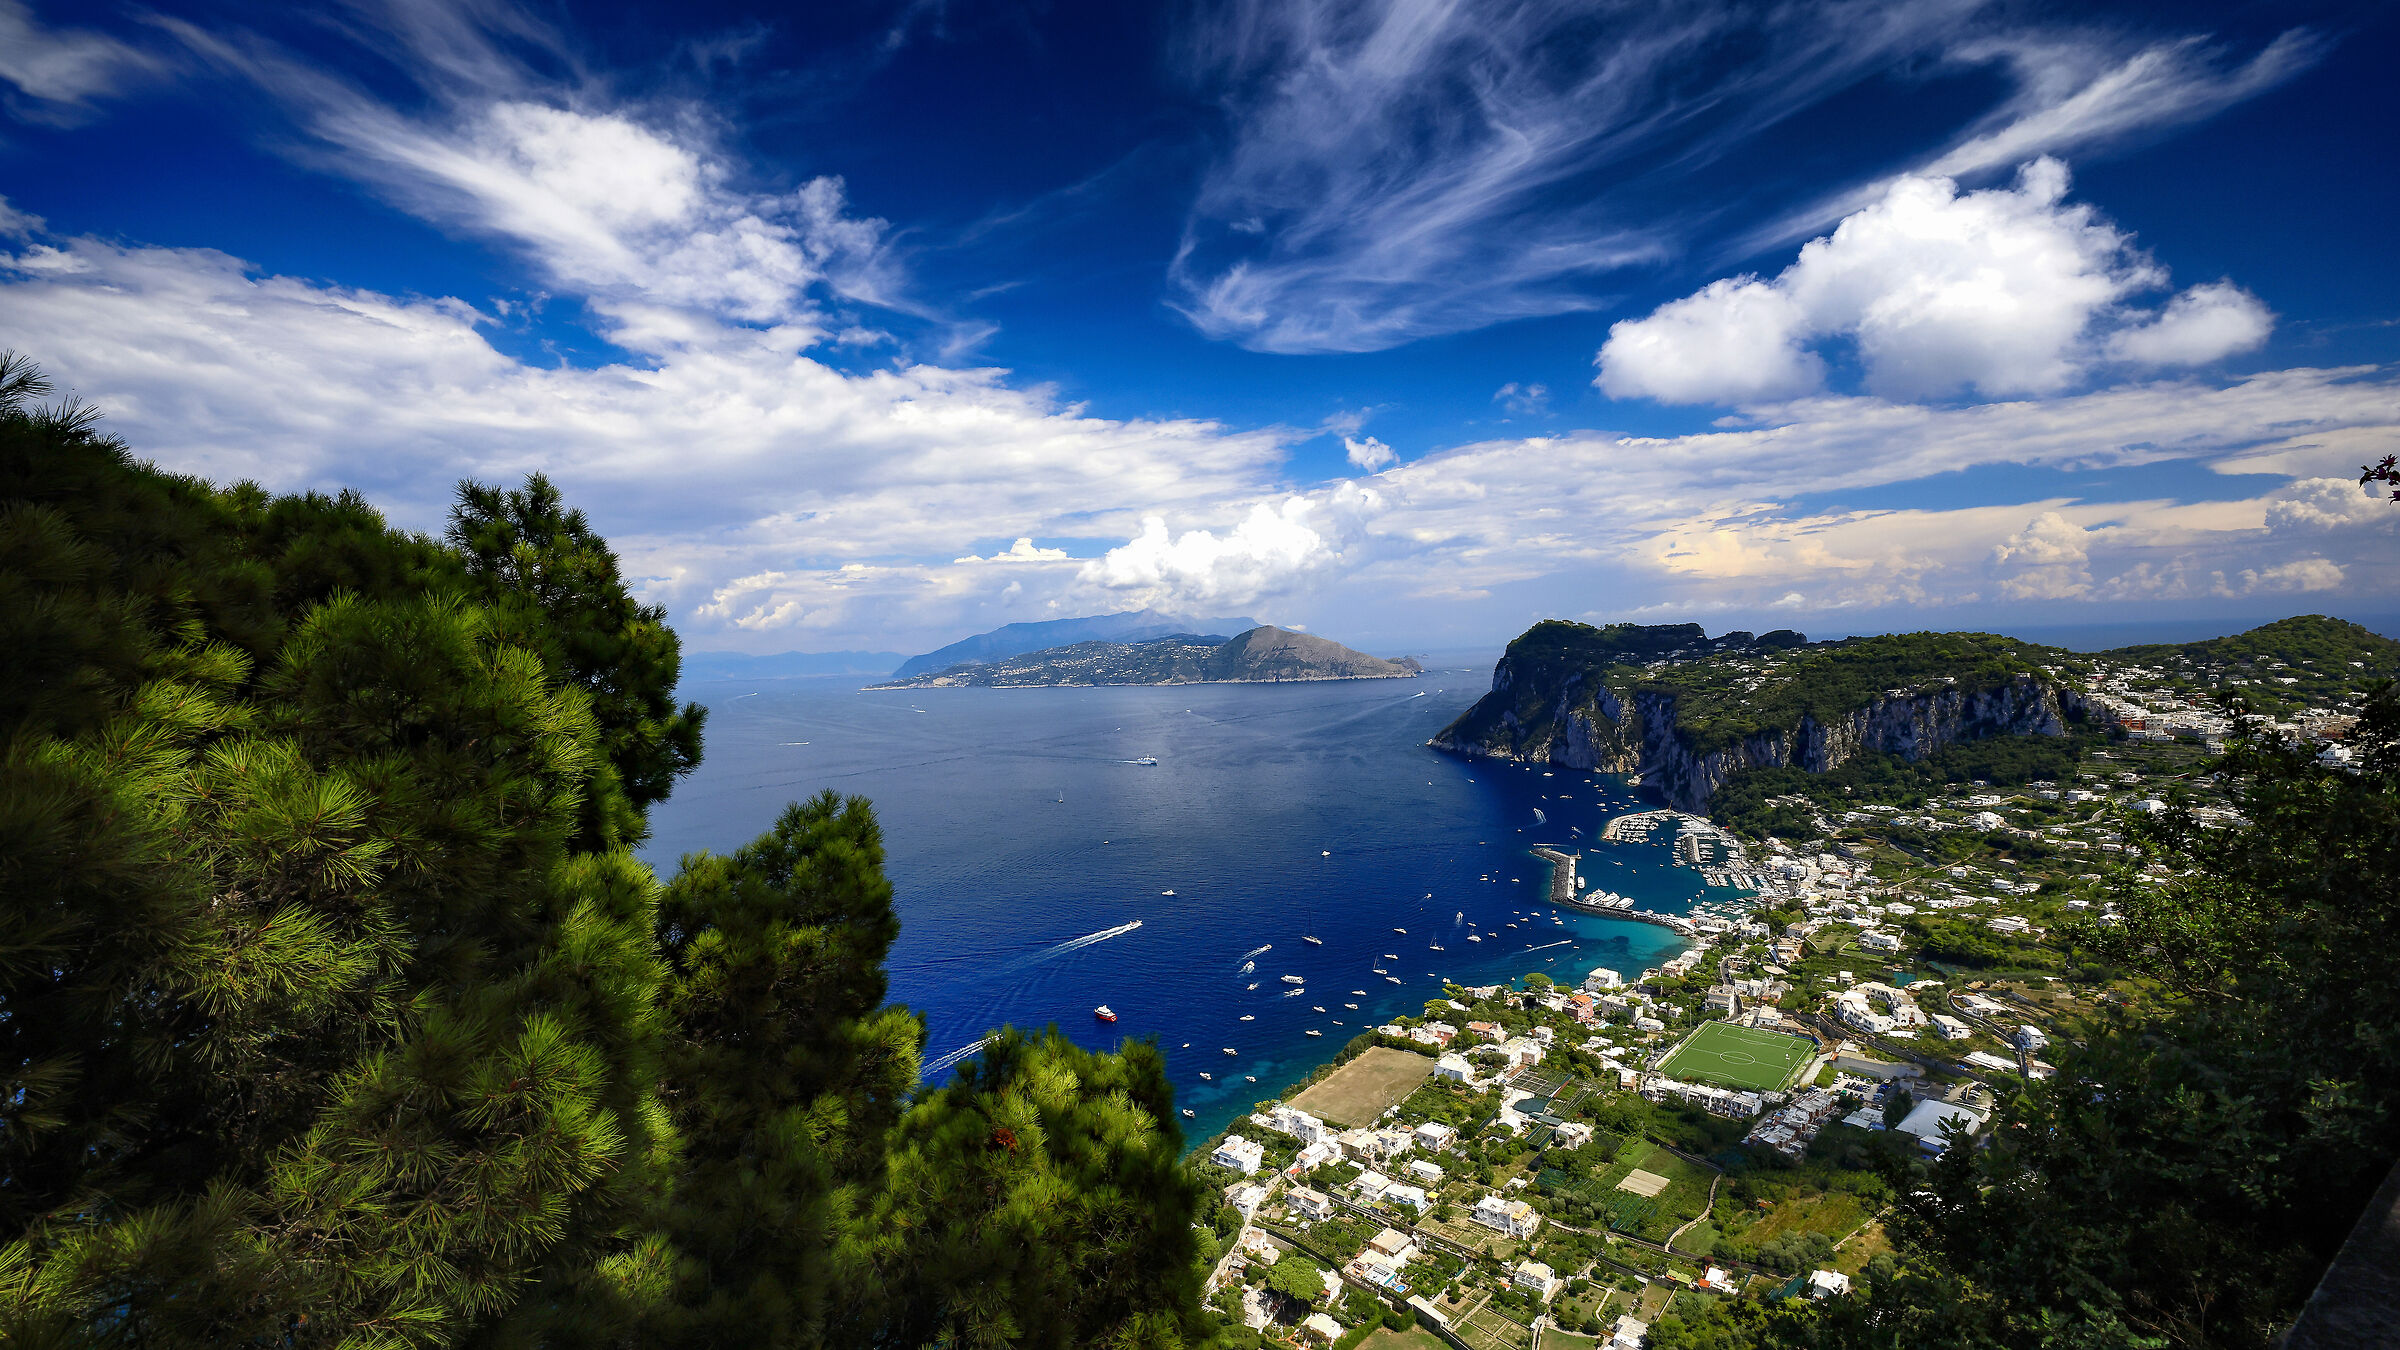 From Capri to Naples...